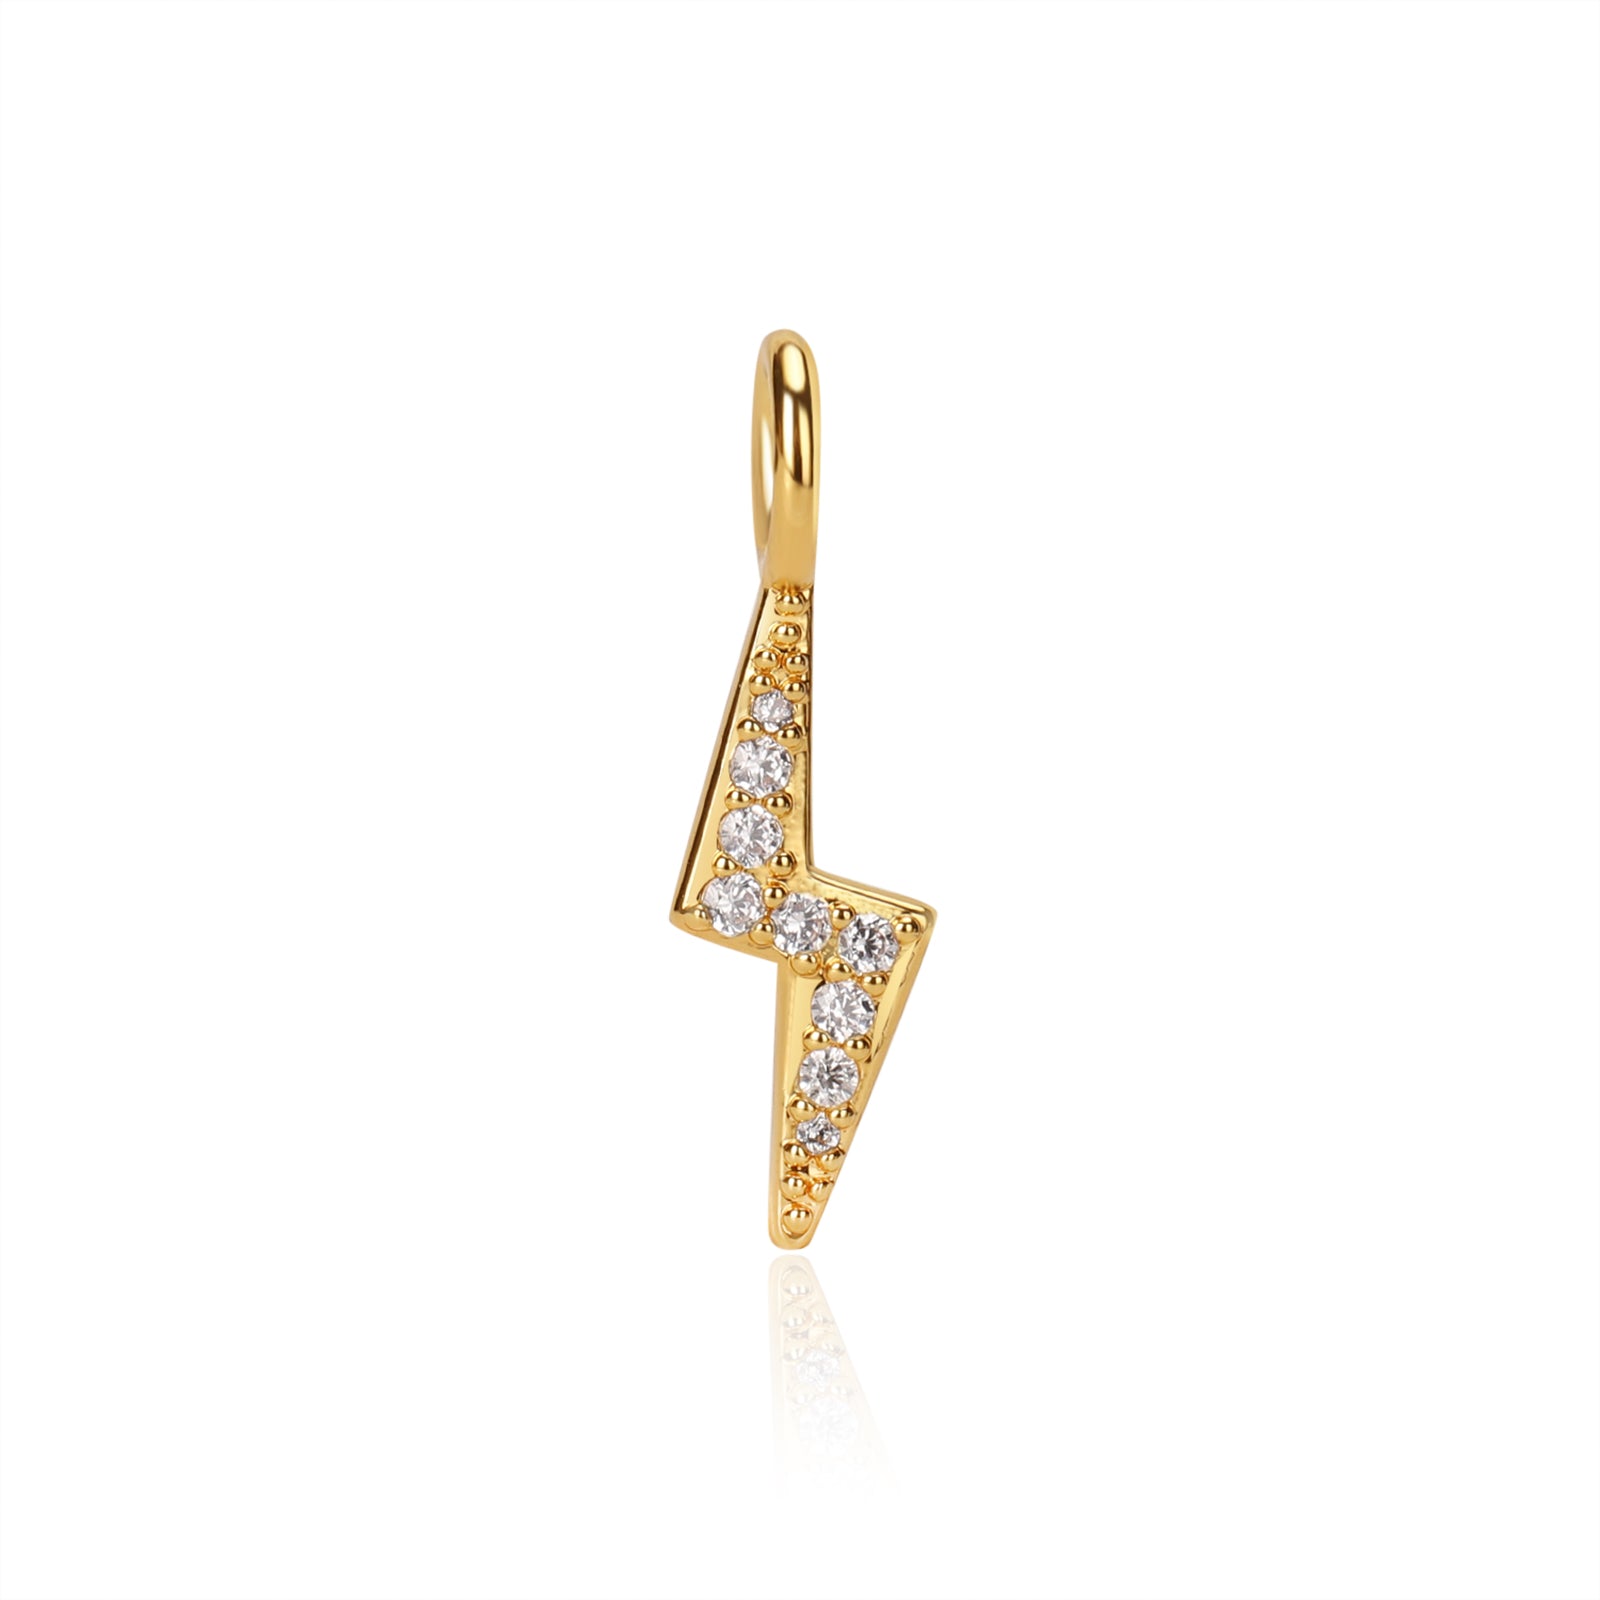 gold lightening bolt charm for necklace from memara